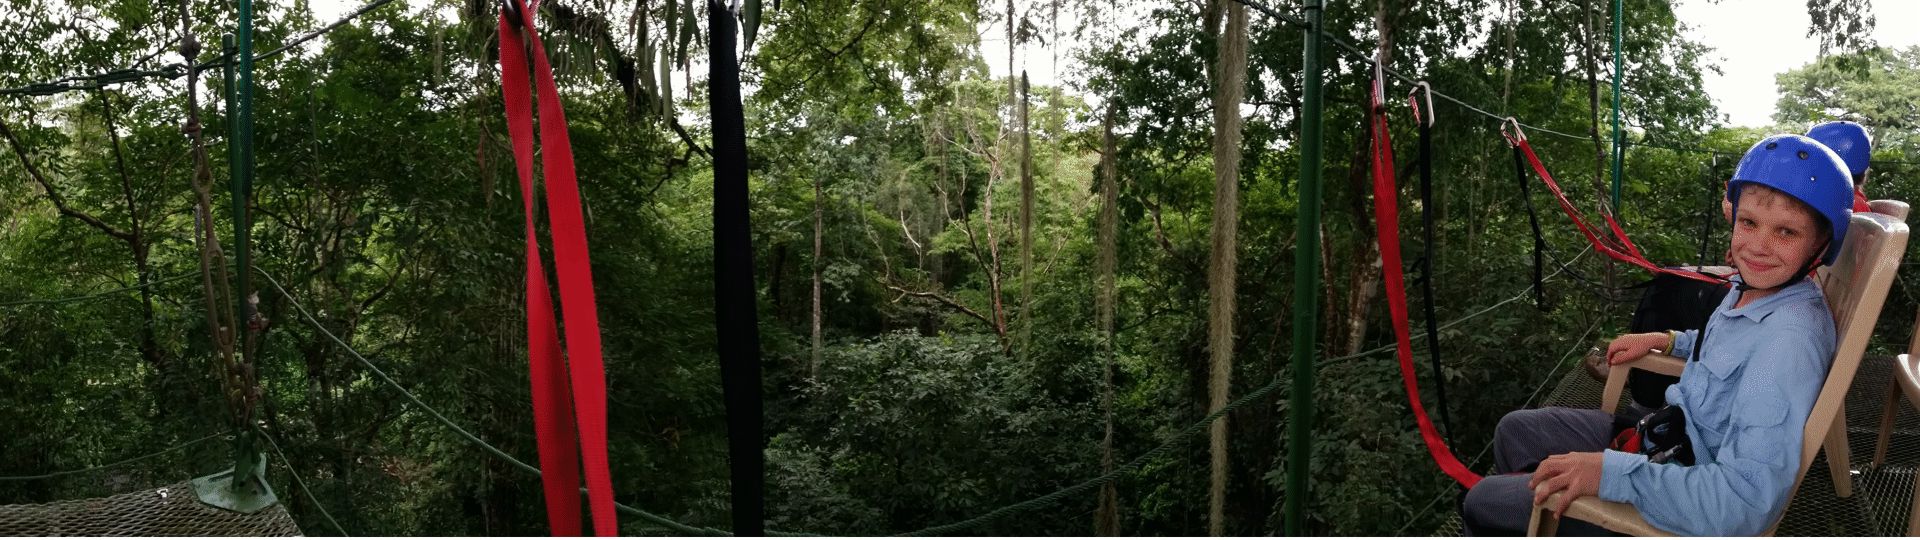 Serendipity Costa Rica - Sitting on platform in rain forest 120 feet above jungle floor